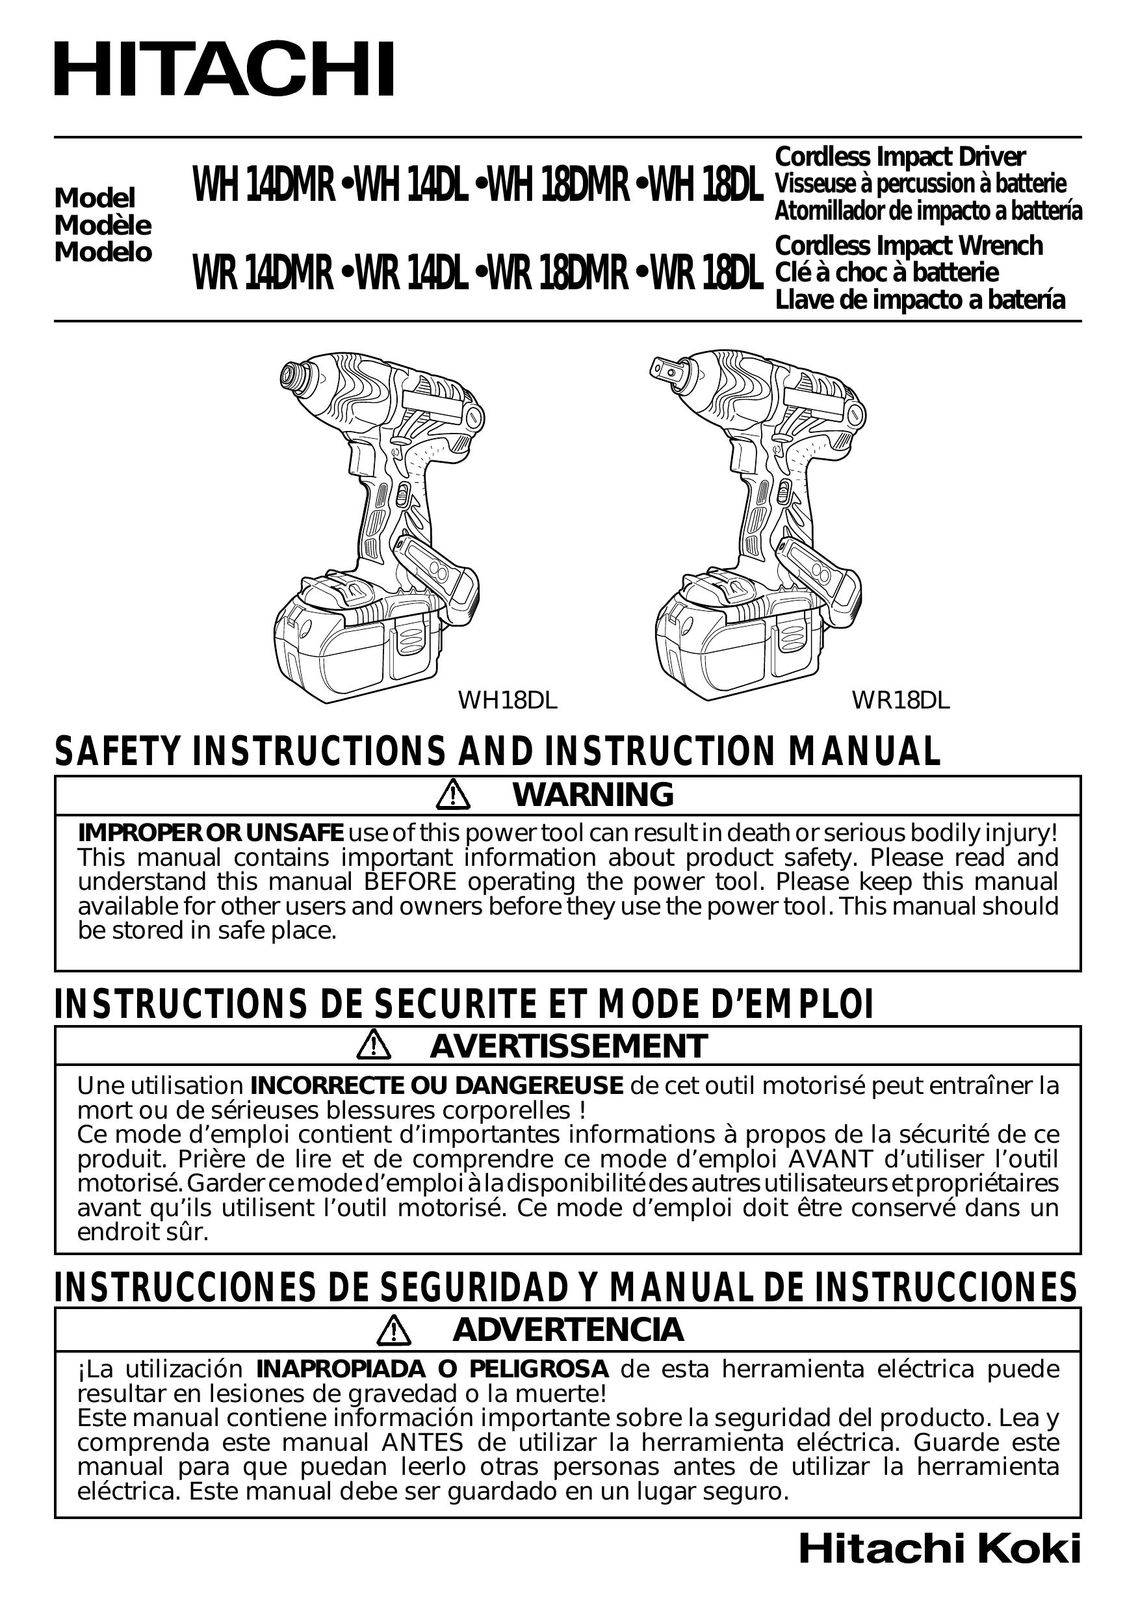 Hitachi WH18DL Cordless Drill User Manual